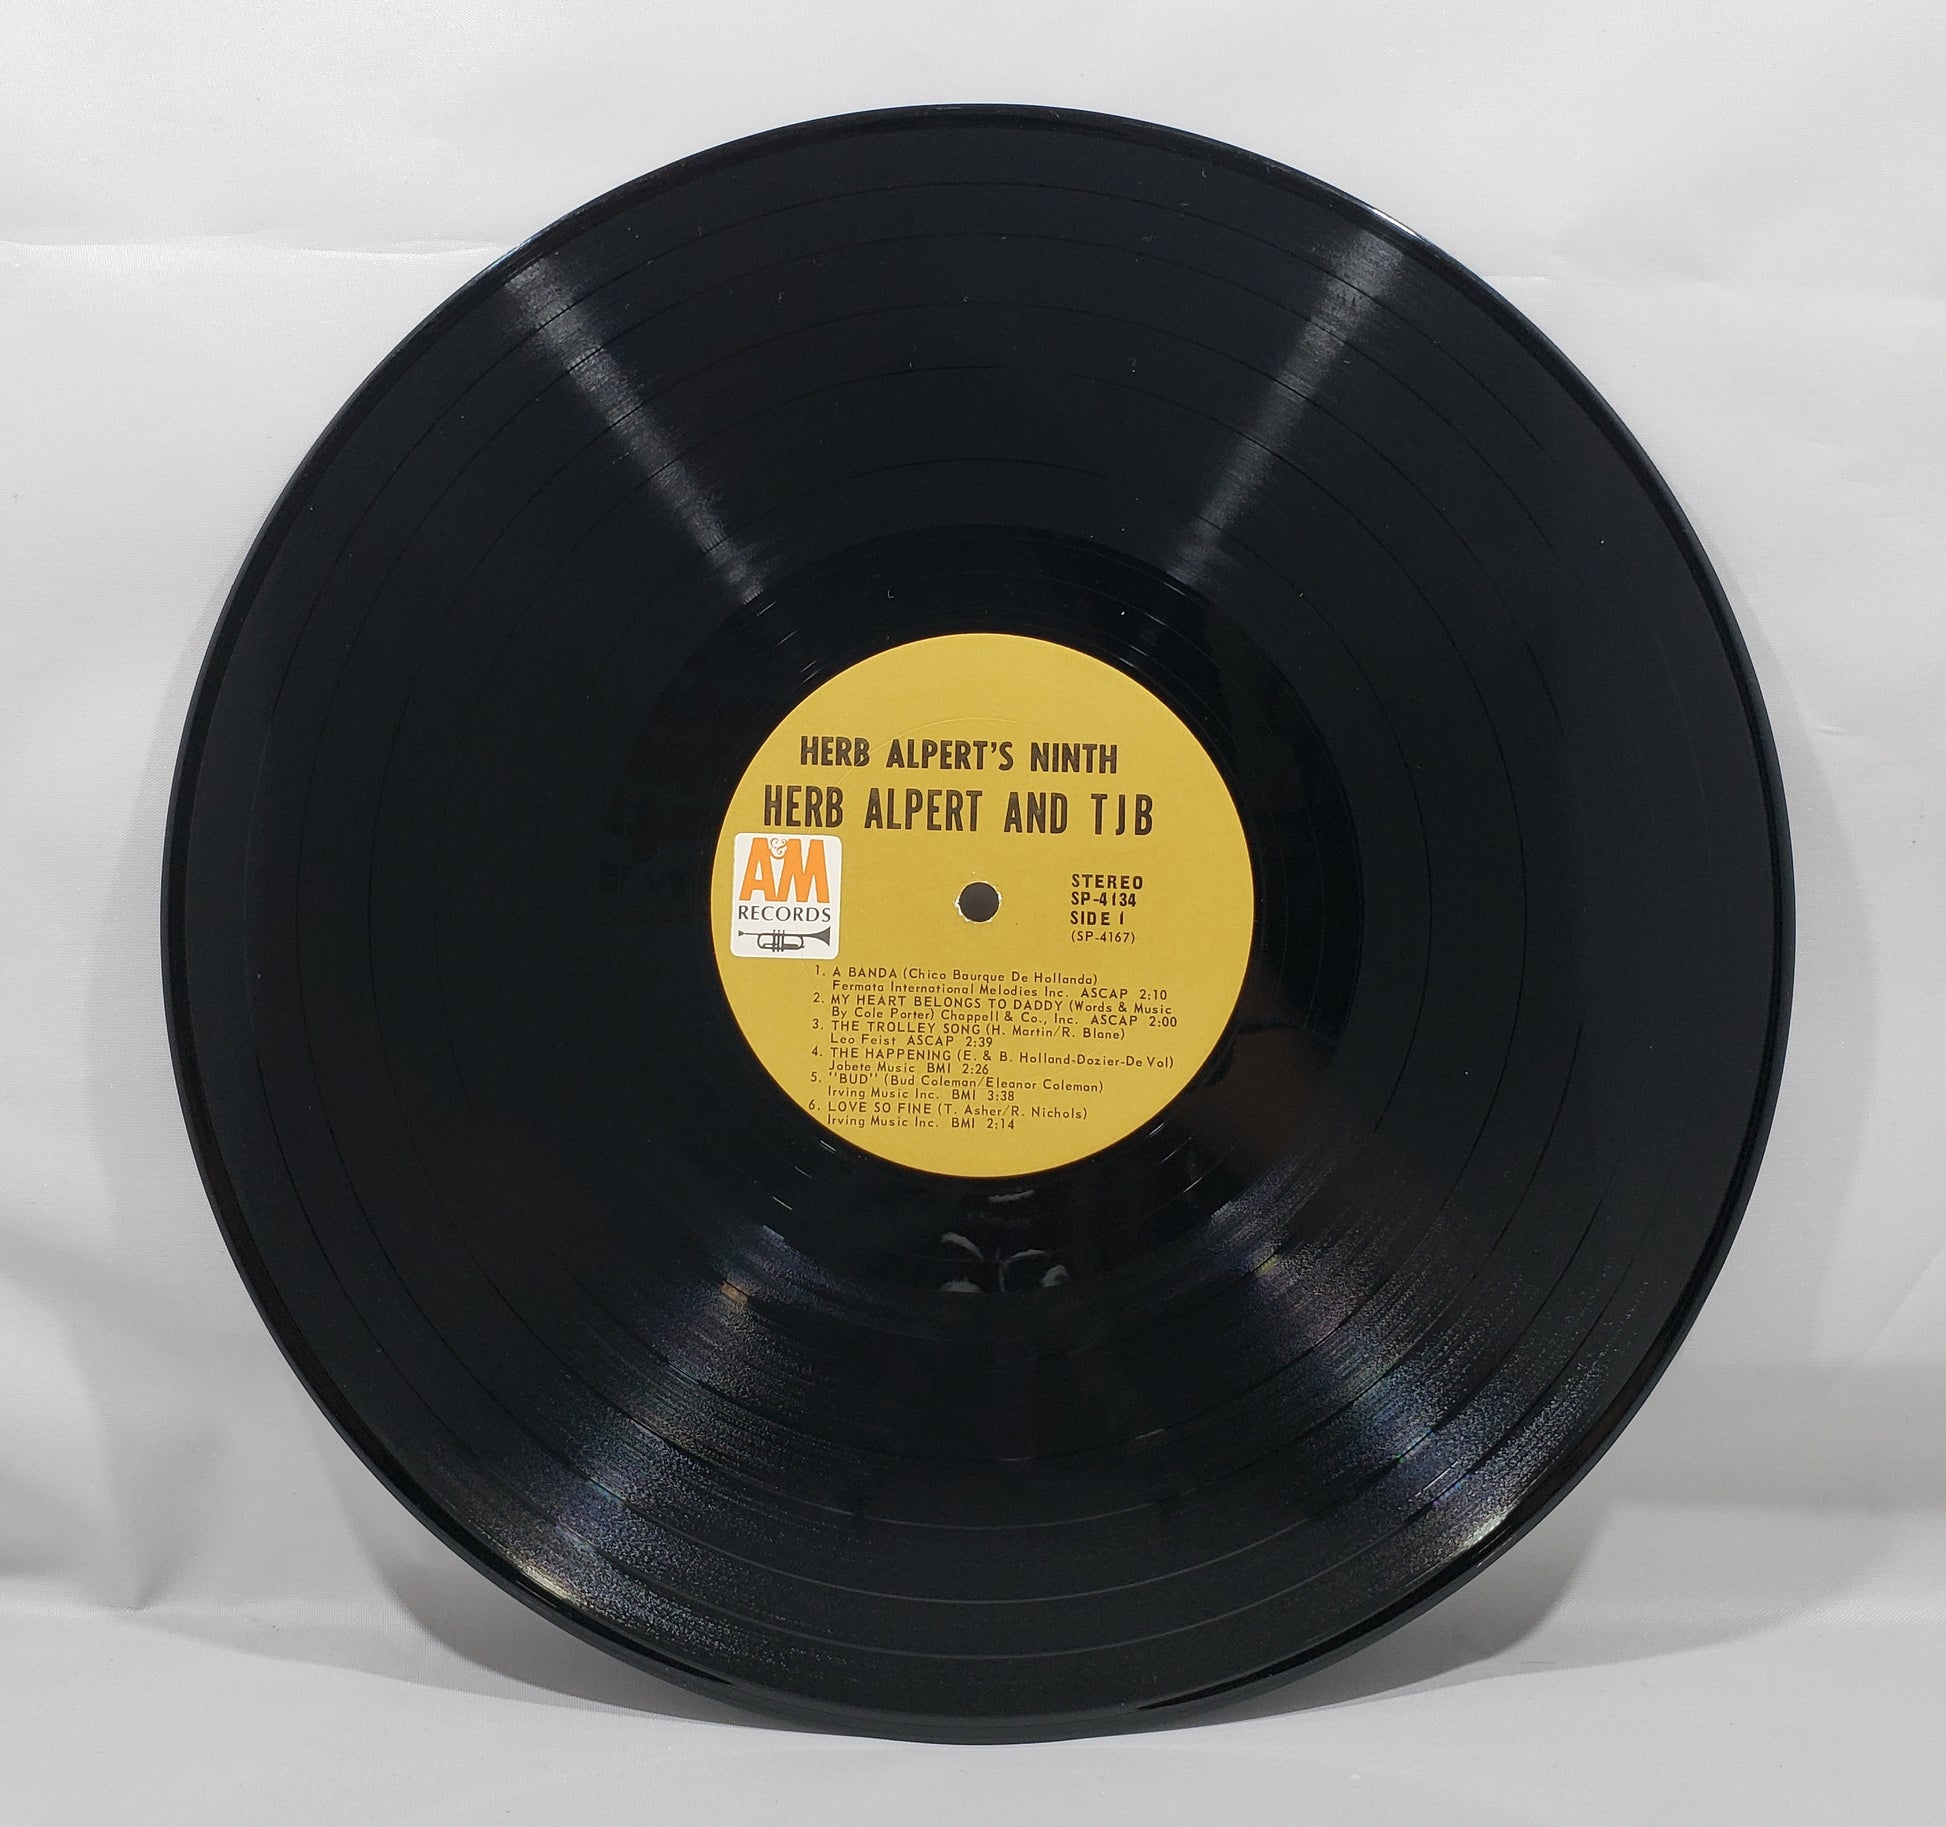 Herb Alpert and the Tijuana Brass - Herb Alpert's Ninth [Vinyl Record LP]